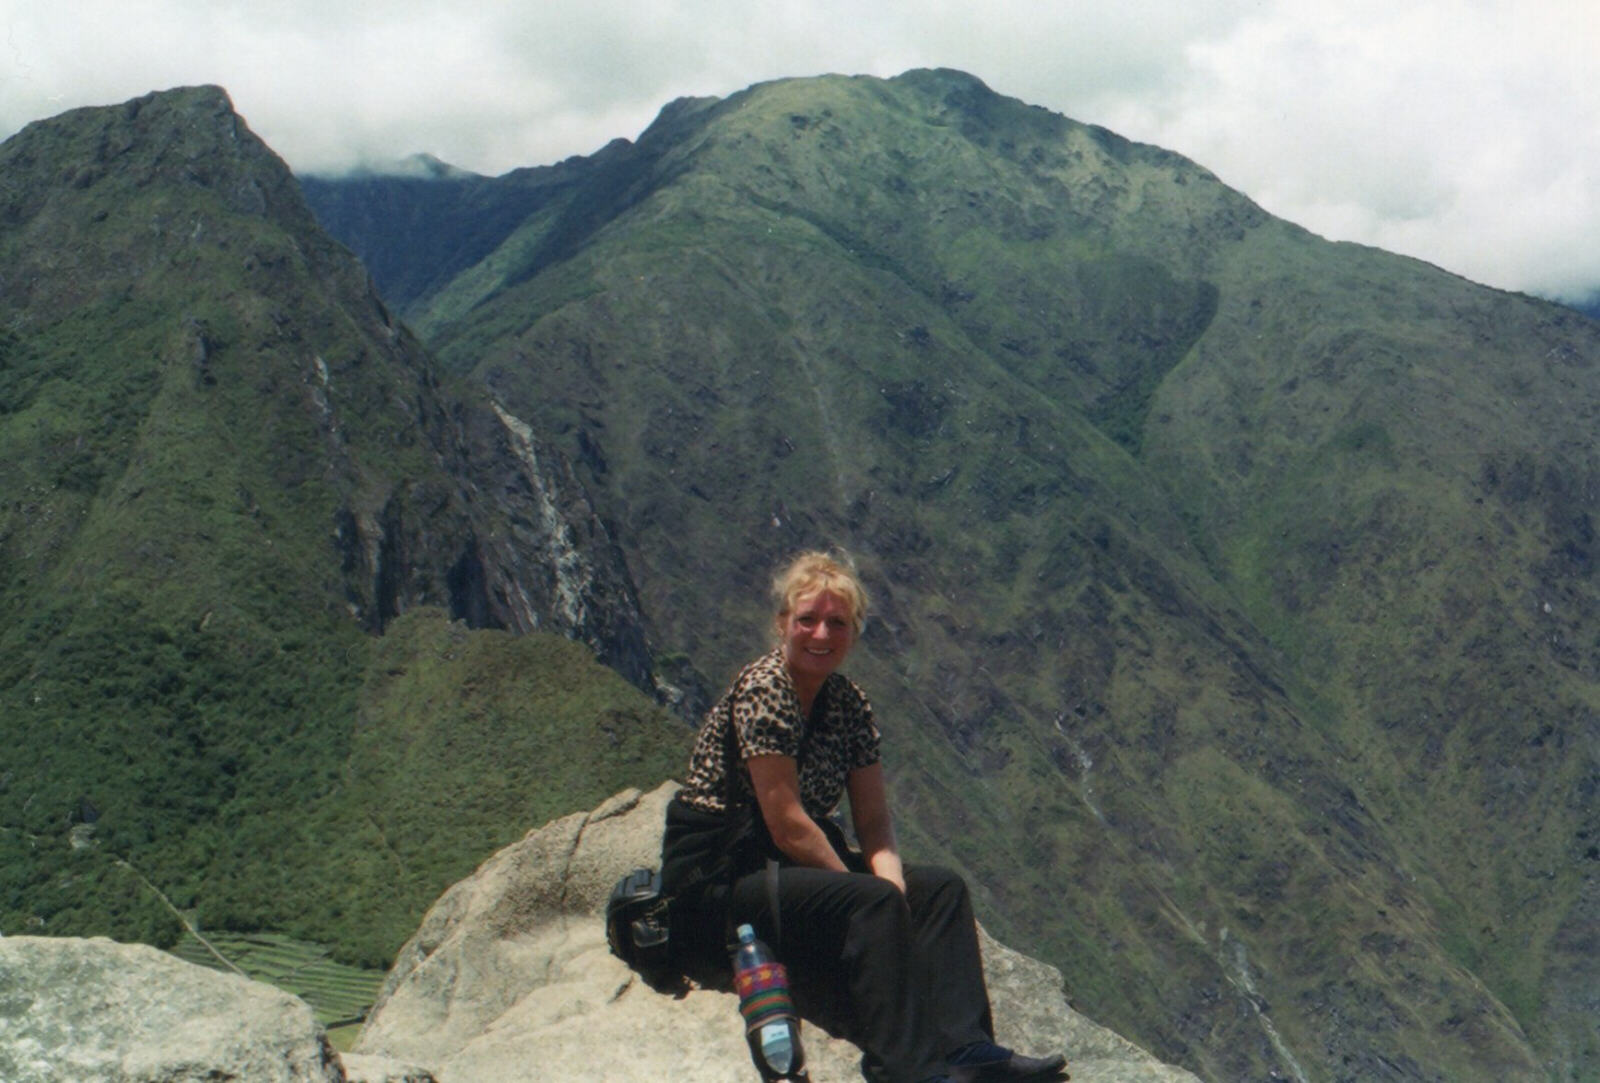 Sheila right at the top of Huayna Picchu at Machu Picchu, Peru